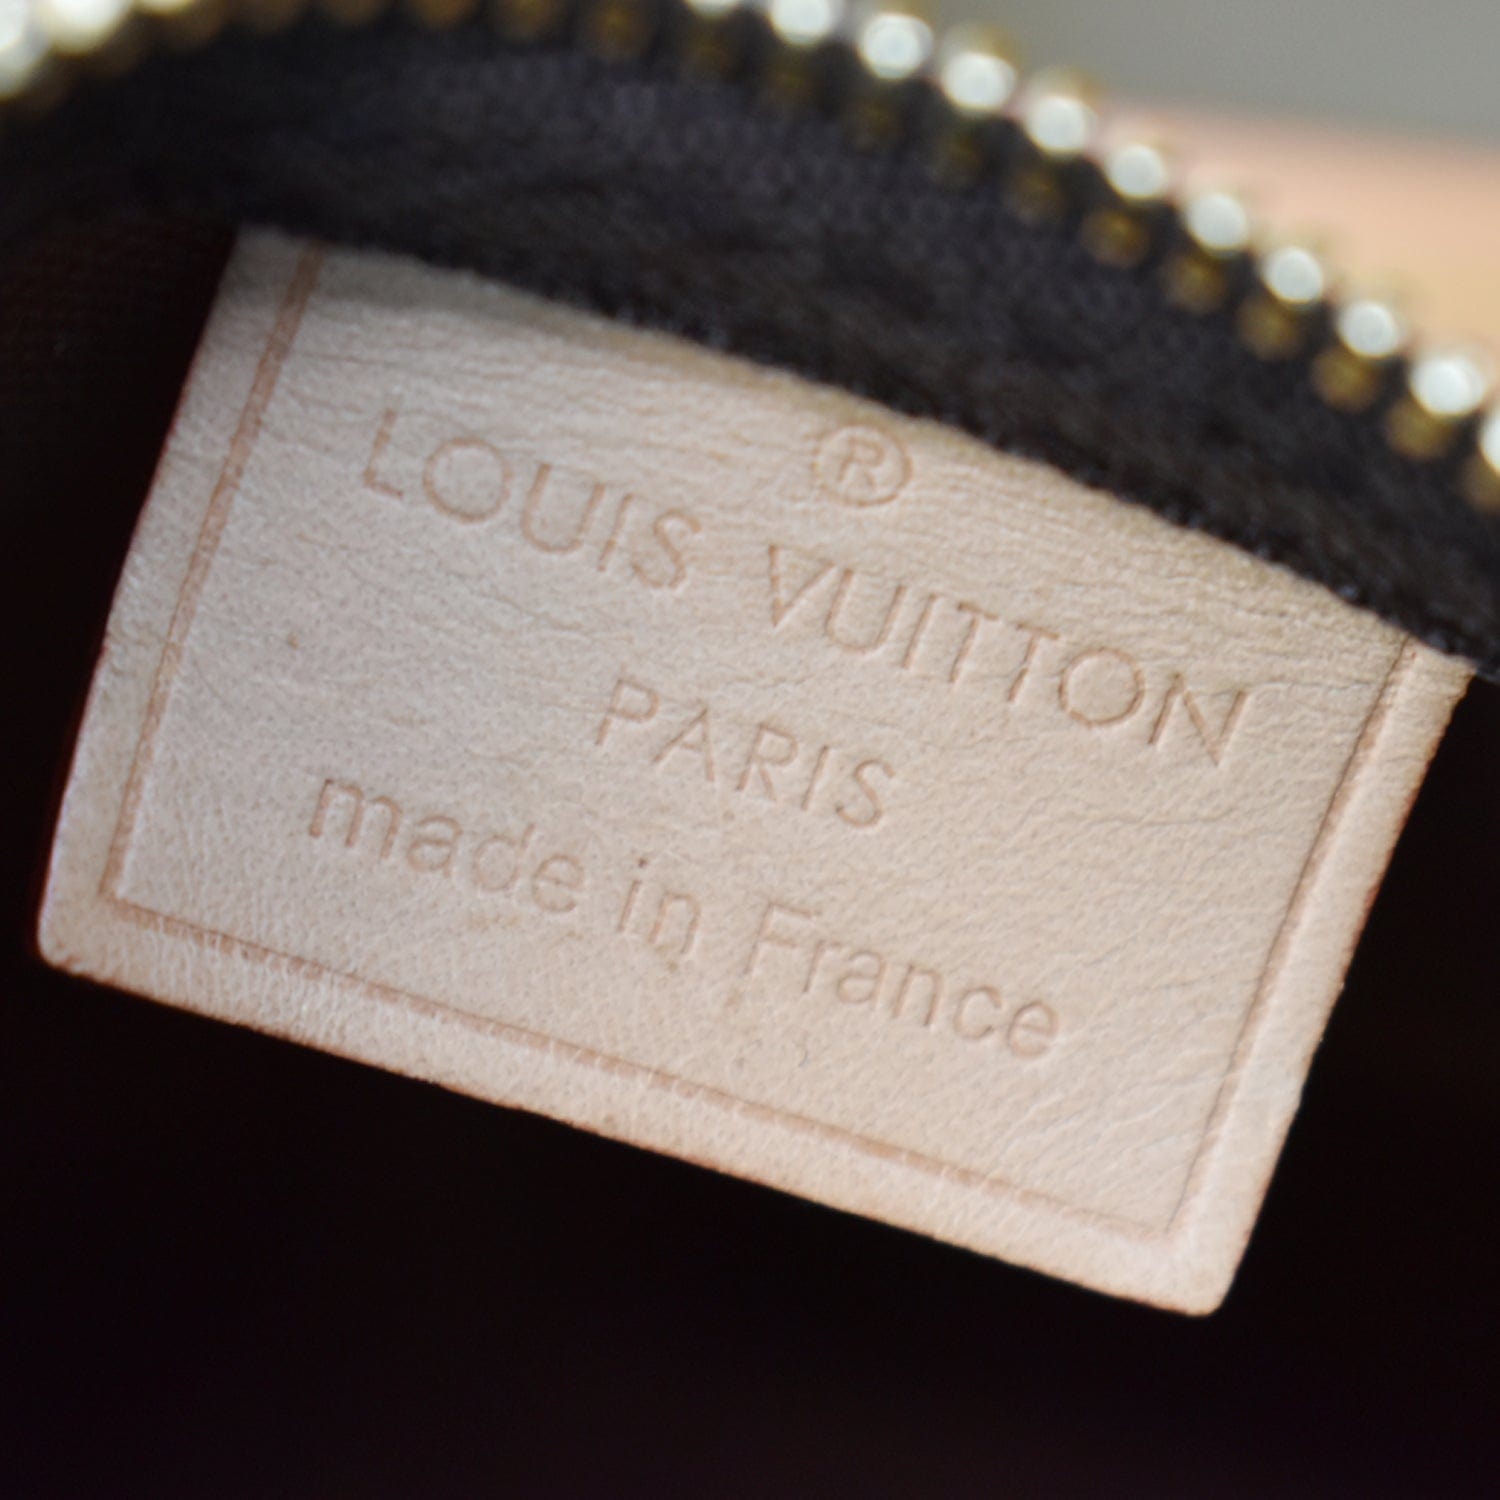 Nano speedy / mini hl leather crossbody bag Louis Vuitton Brown in Leather  - 27869390